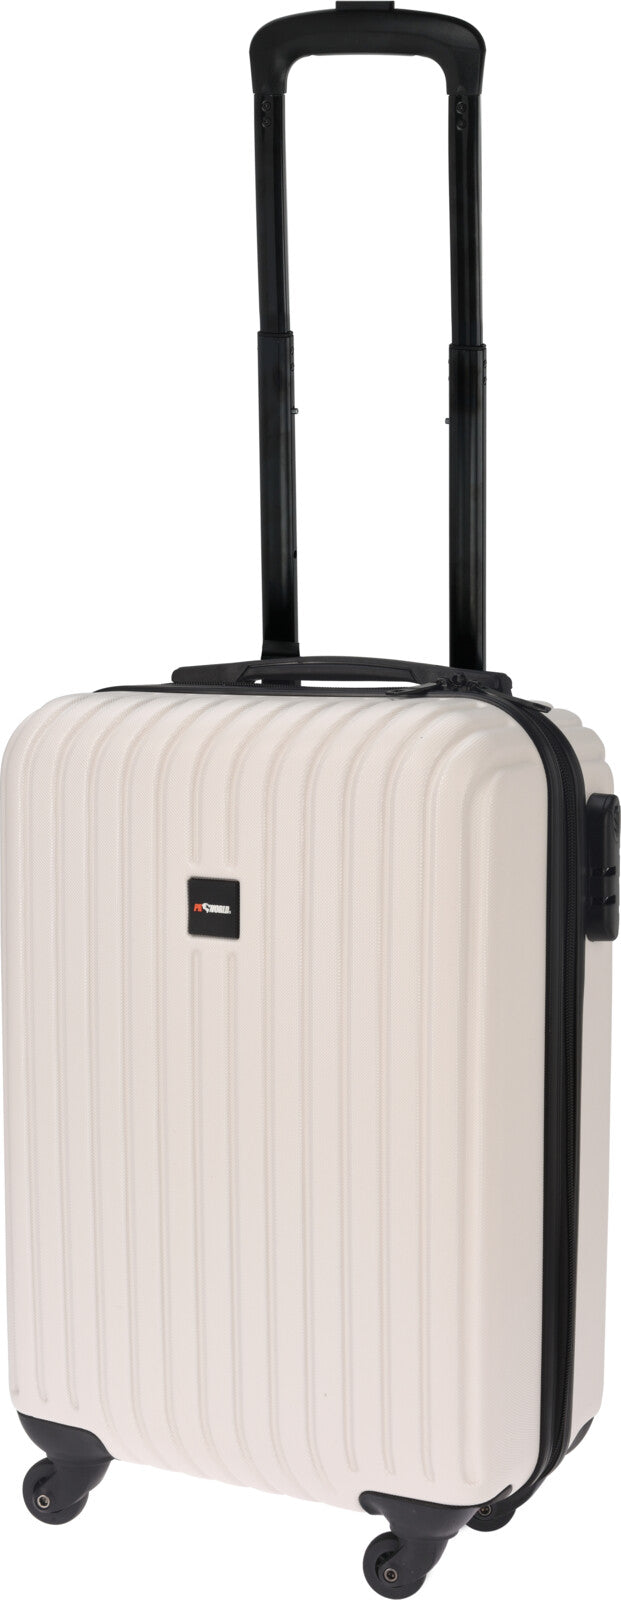 Kuffert hvid, 28 liter